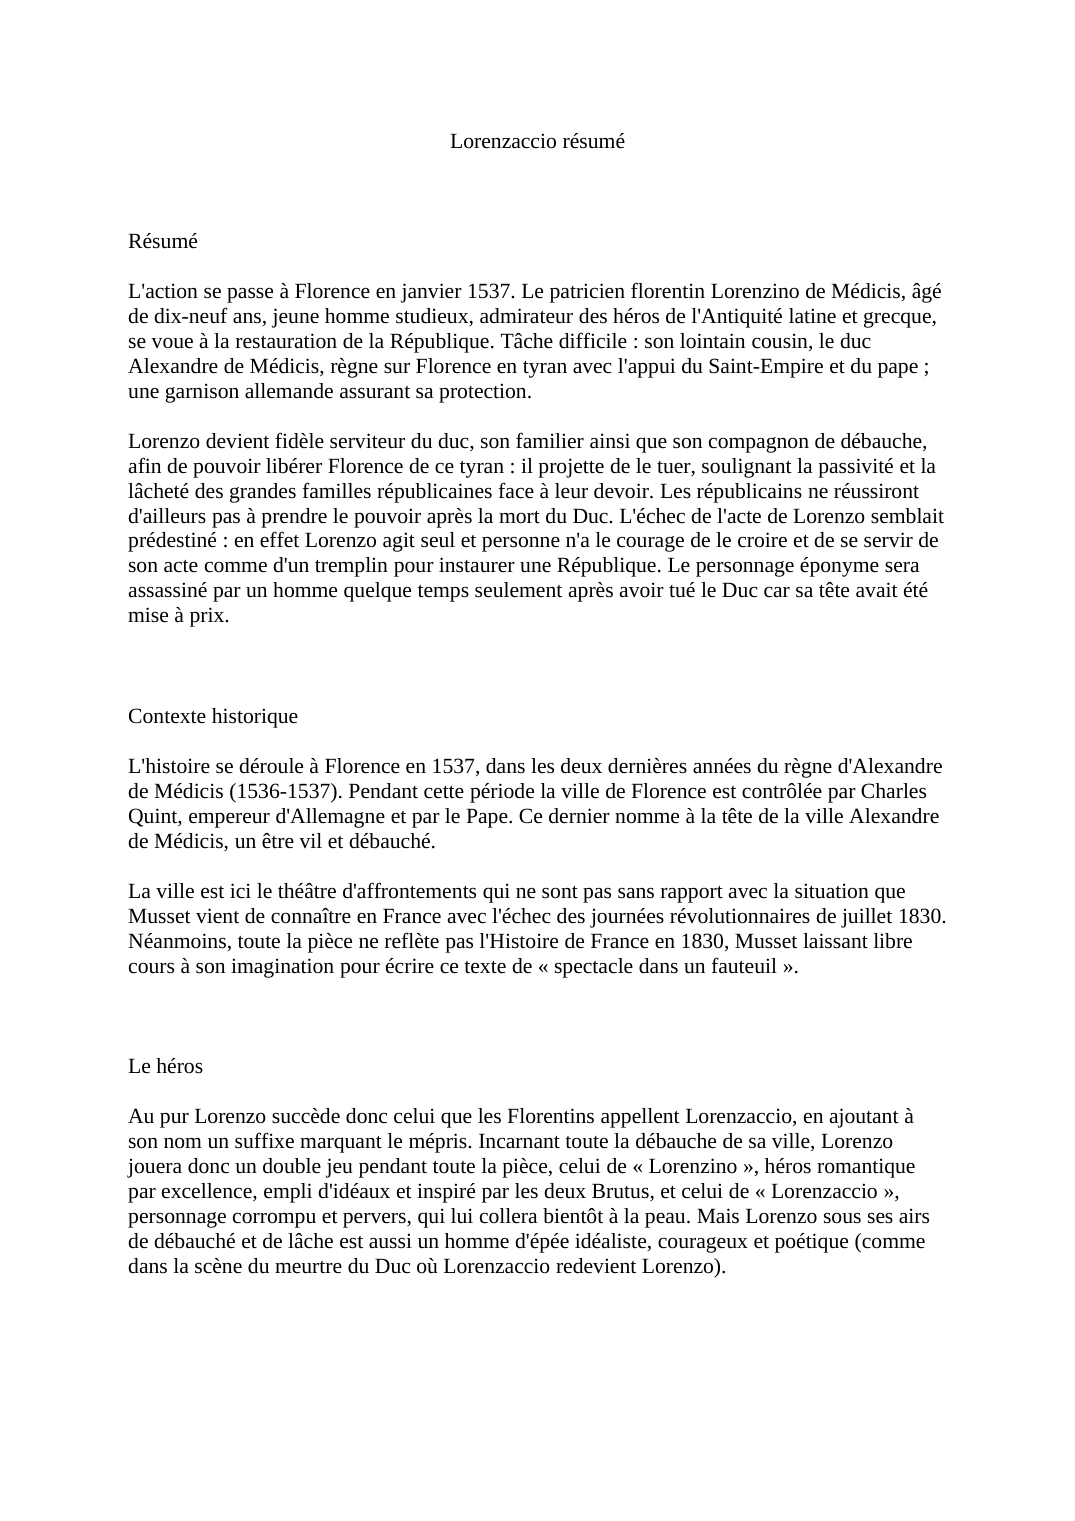 Prévisualisation du document lorenzaccio